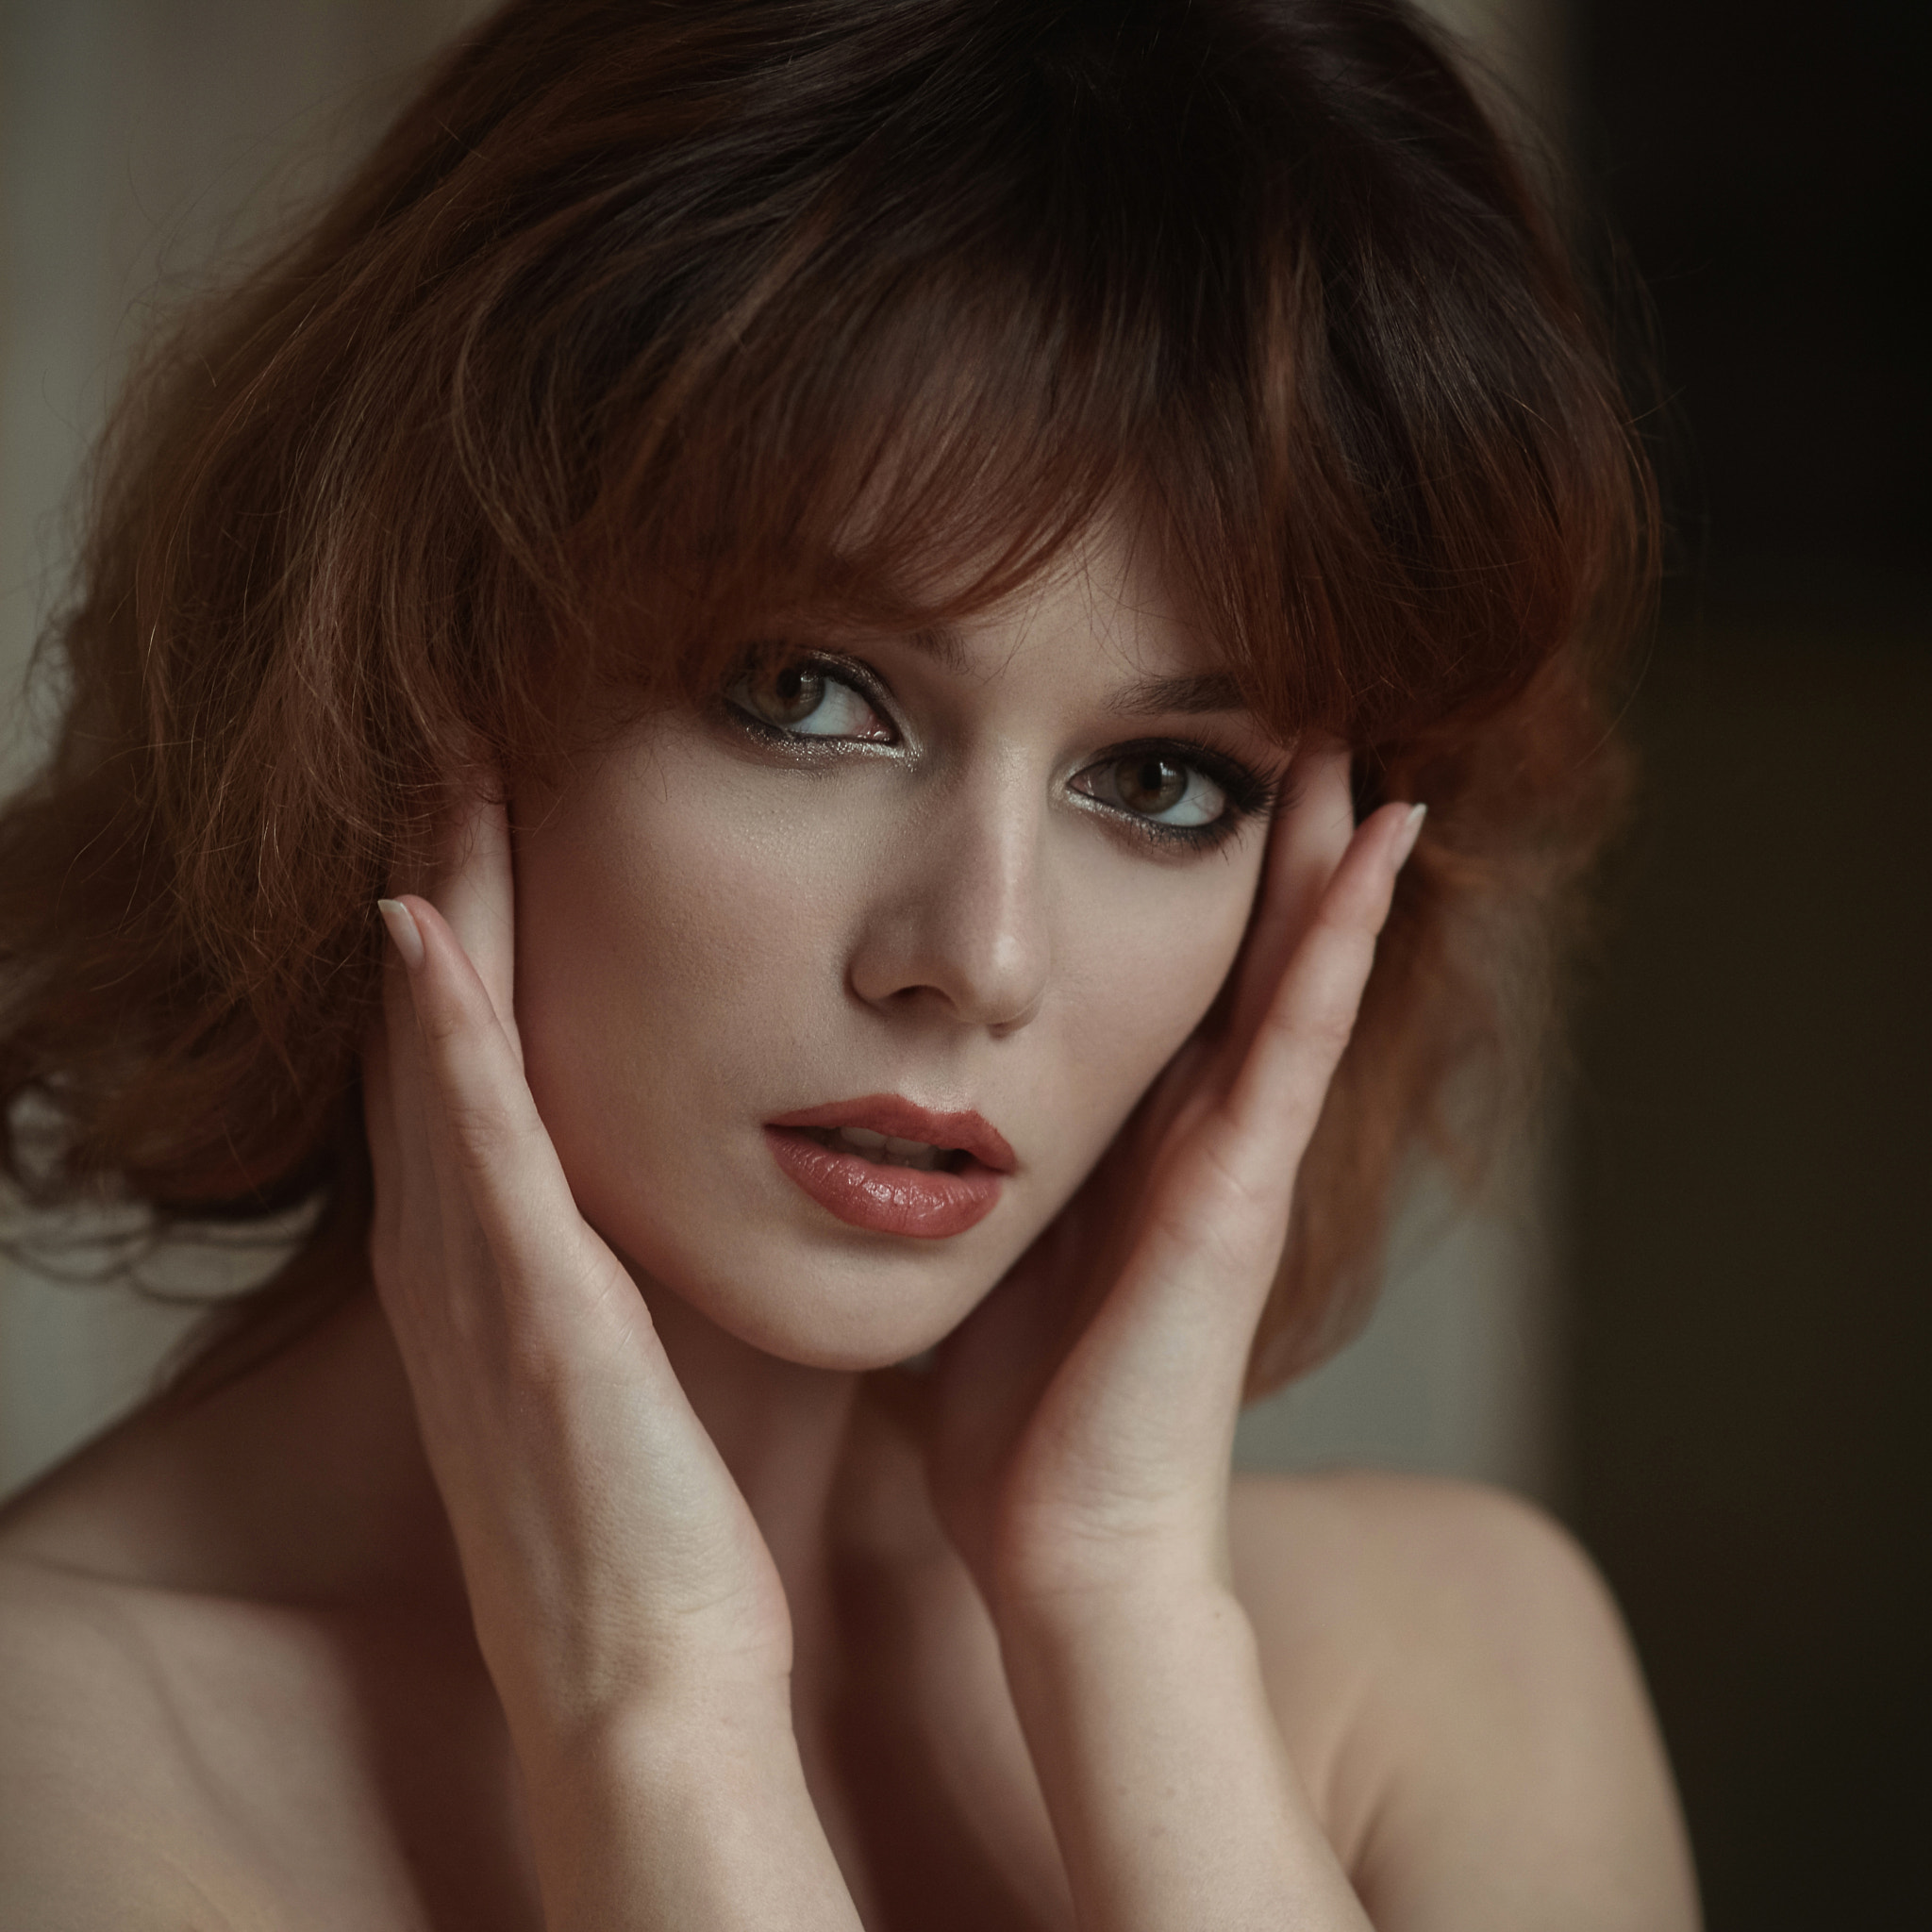 Dmitry Levykin Women Brunette Short Hair Makeup Eyeshadow Eyeliner Lipstick Hand On Face Looking At  2048x2048